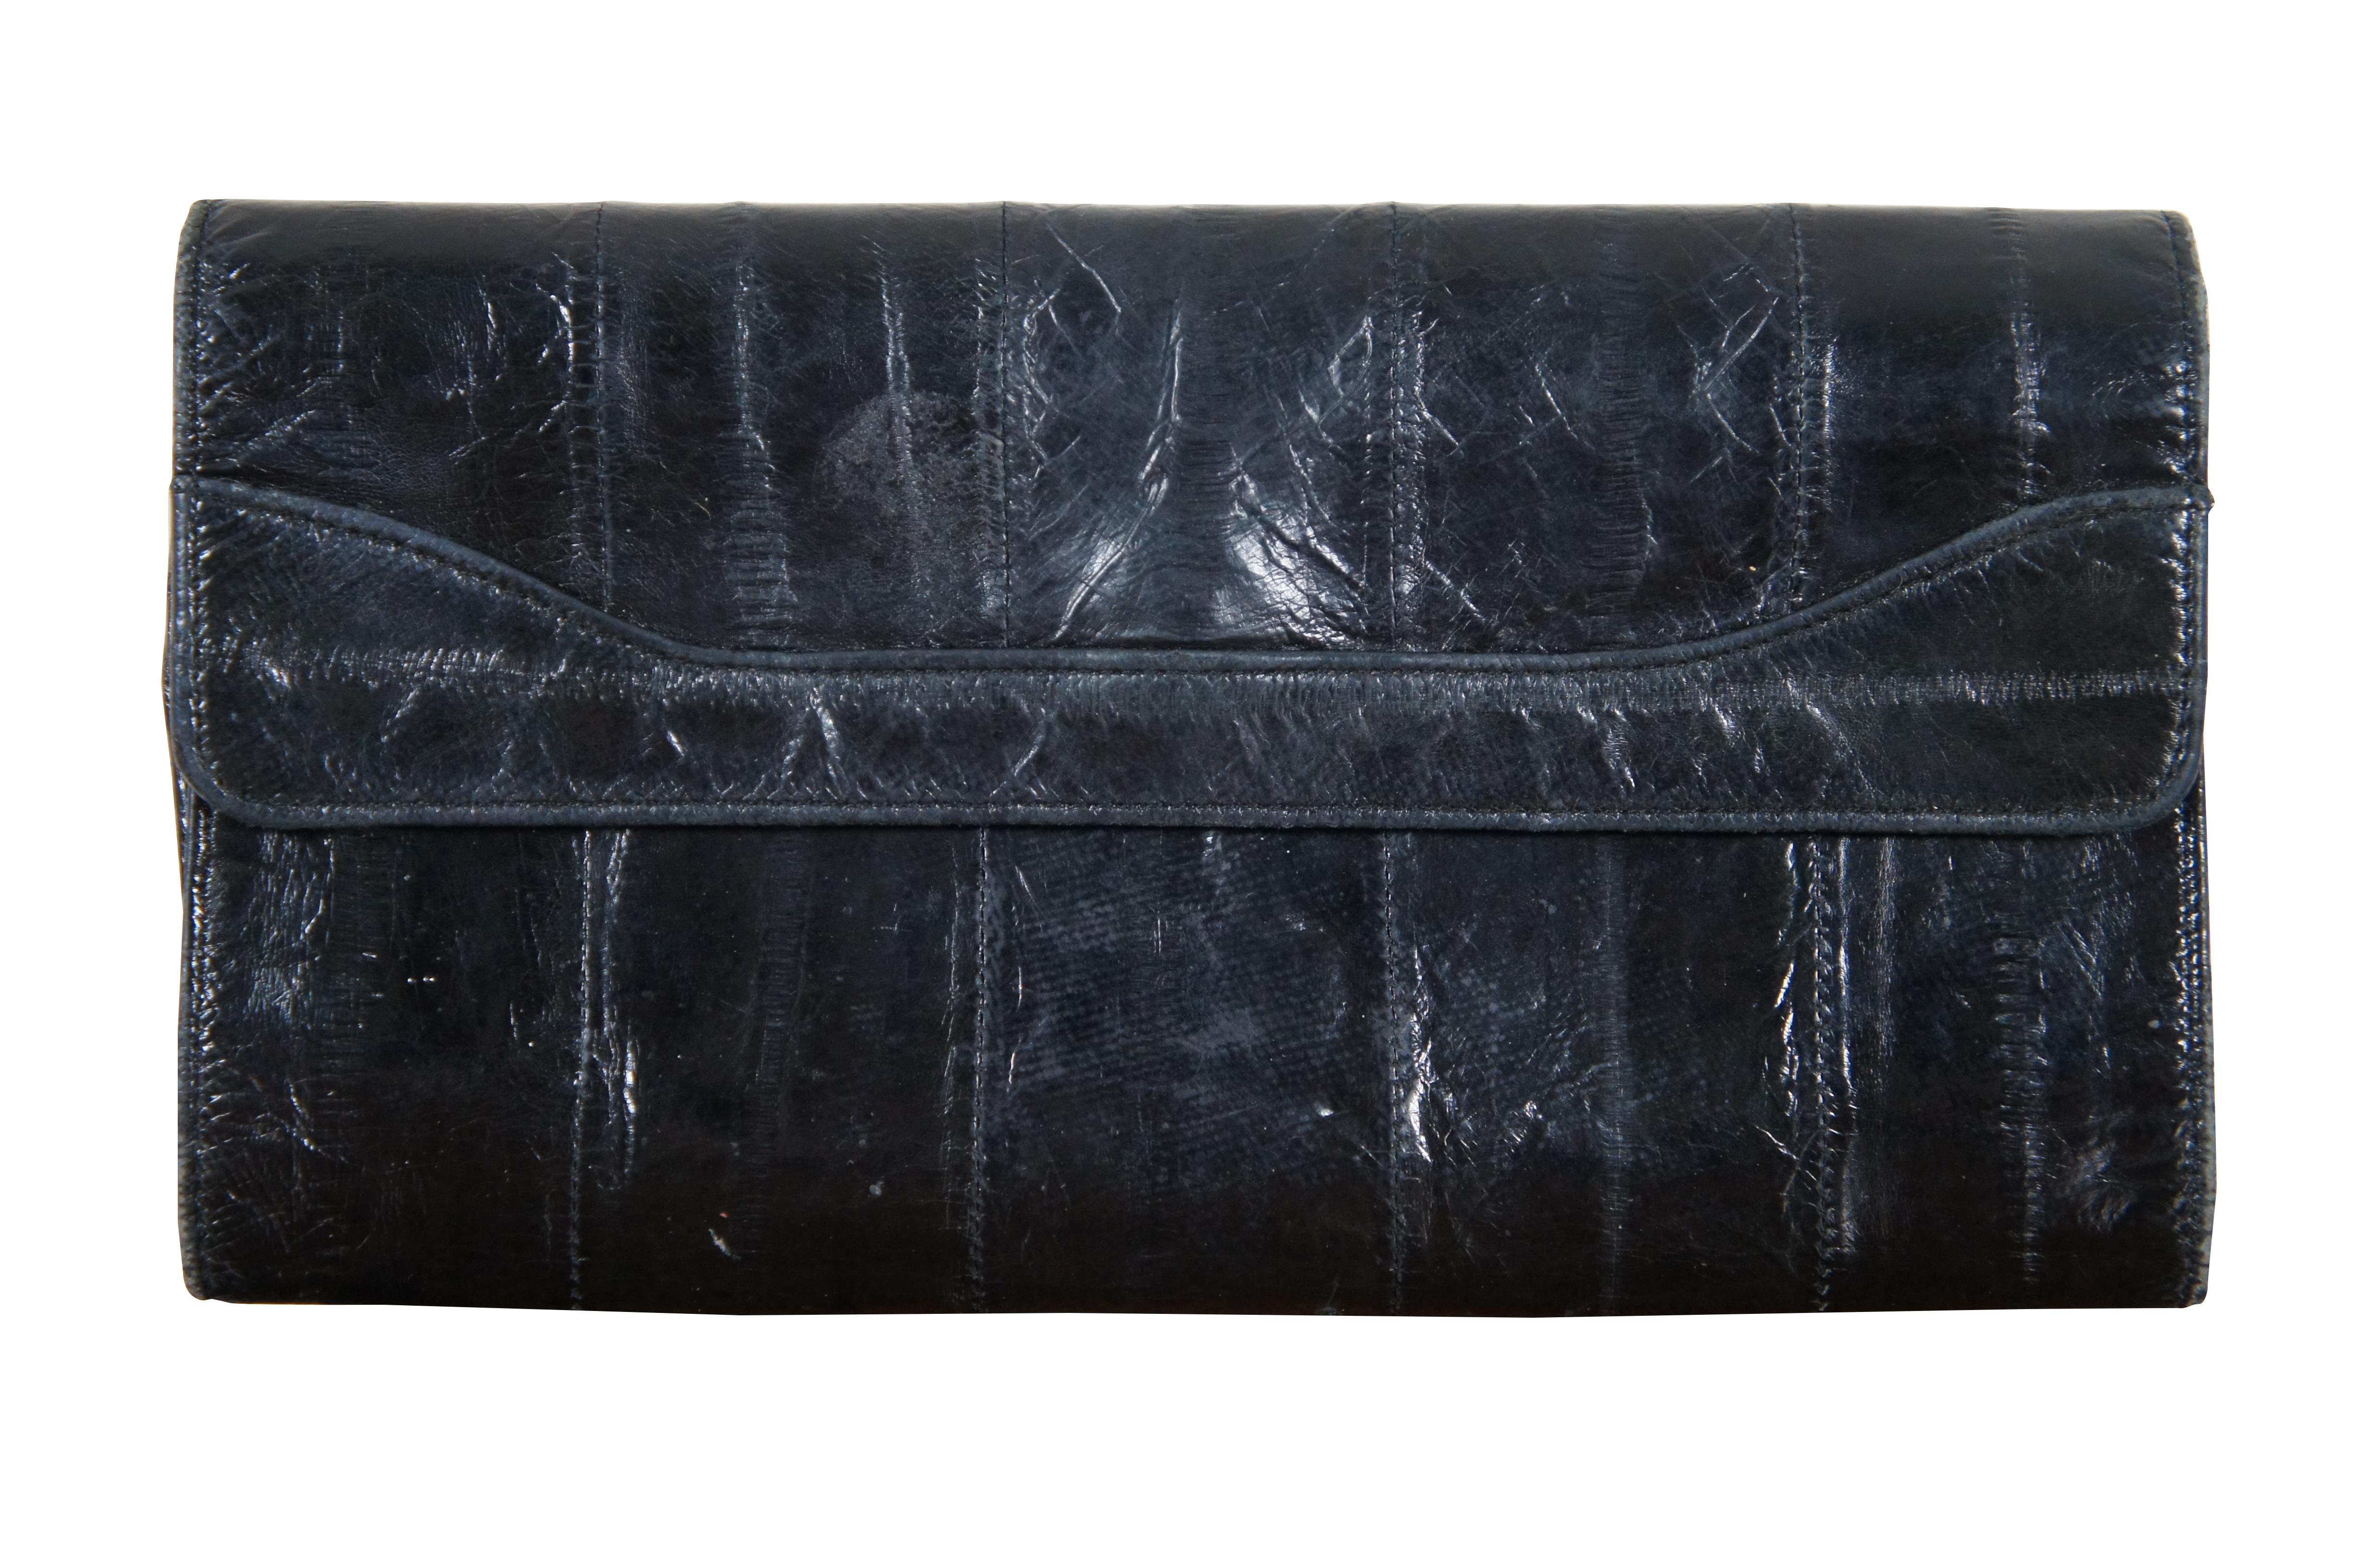 Lot of five vintage eel skin purses including a black tri-fold clutch / billfold, black bi-fold wallet, medium brown wallet, medium brown zippered pouch, and burgundy coin purse / bi-fold wallet.

Largest - 7.5” x 0.75” x 4.125” / Smallest - 3.5”